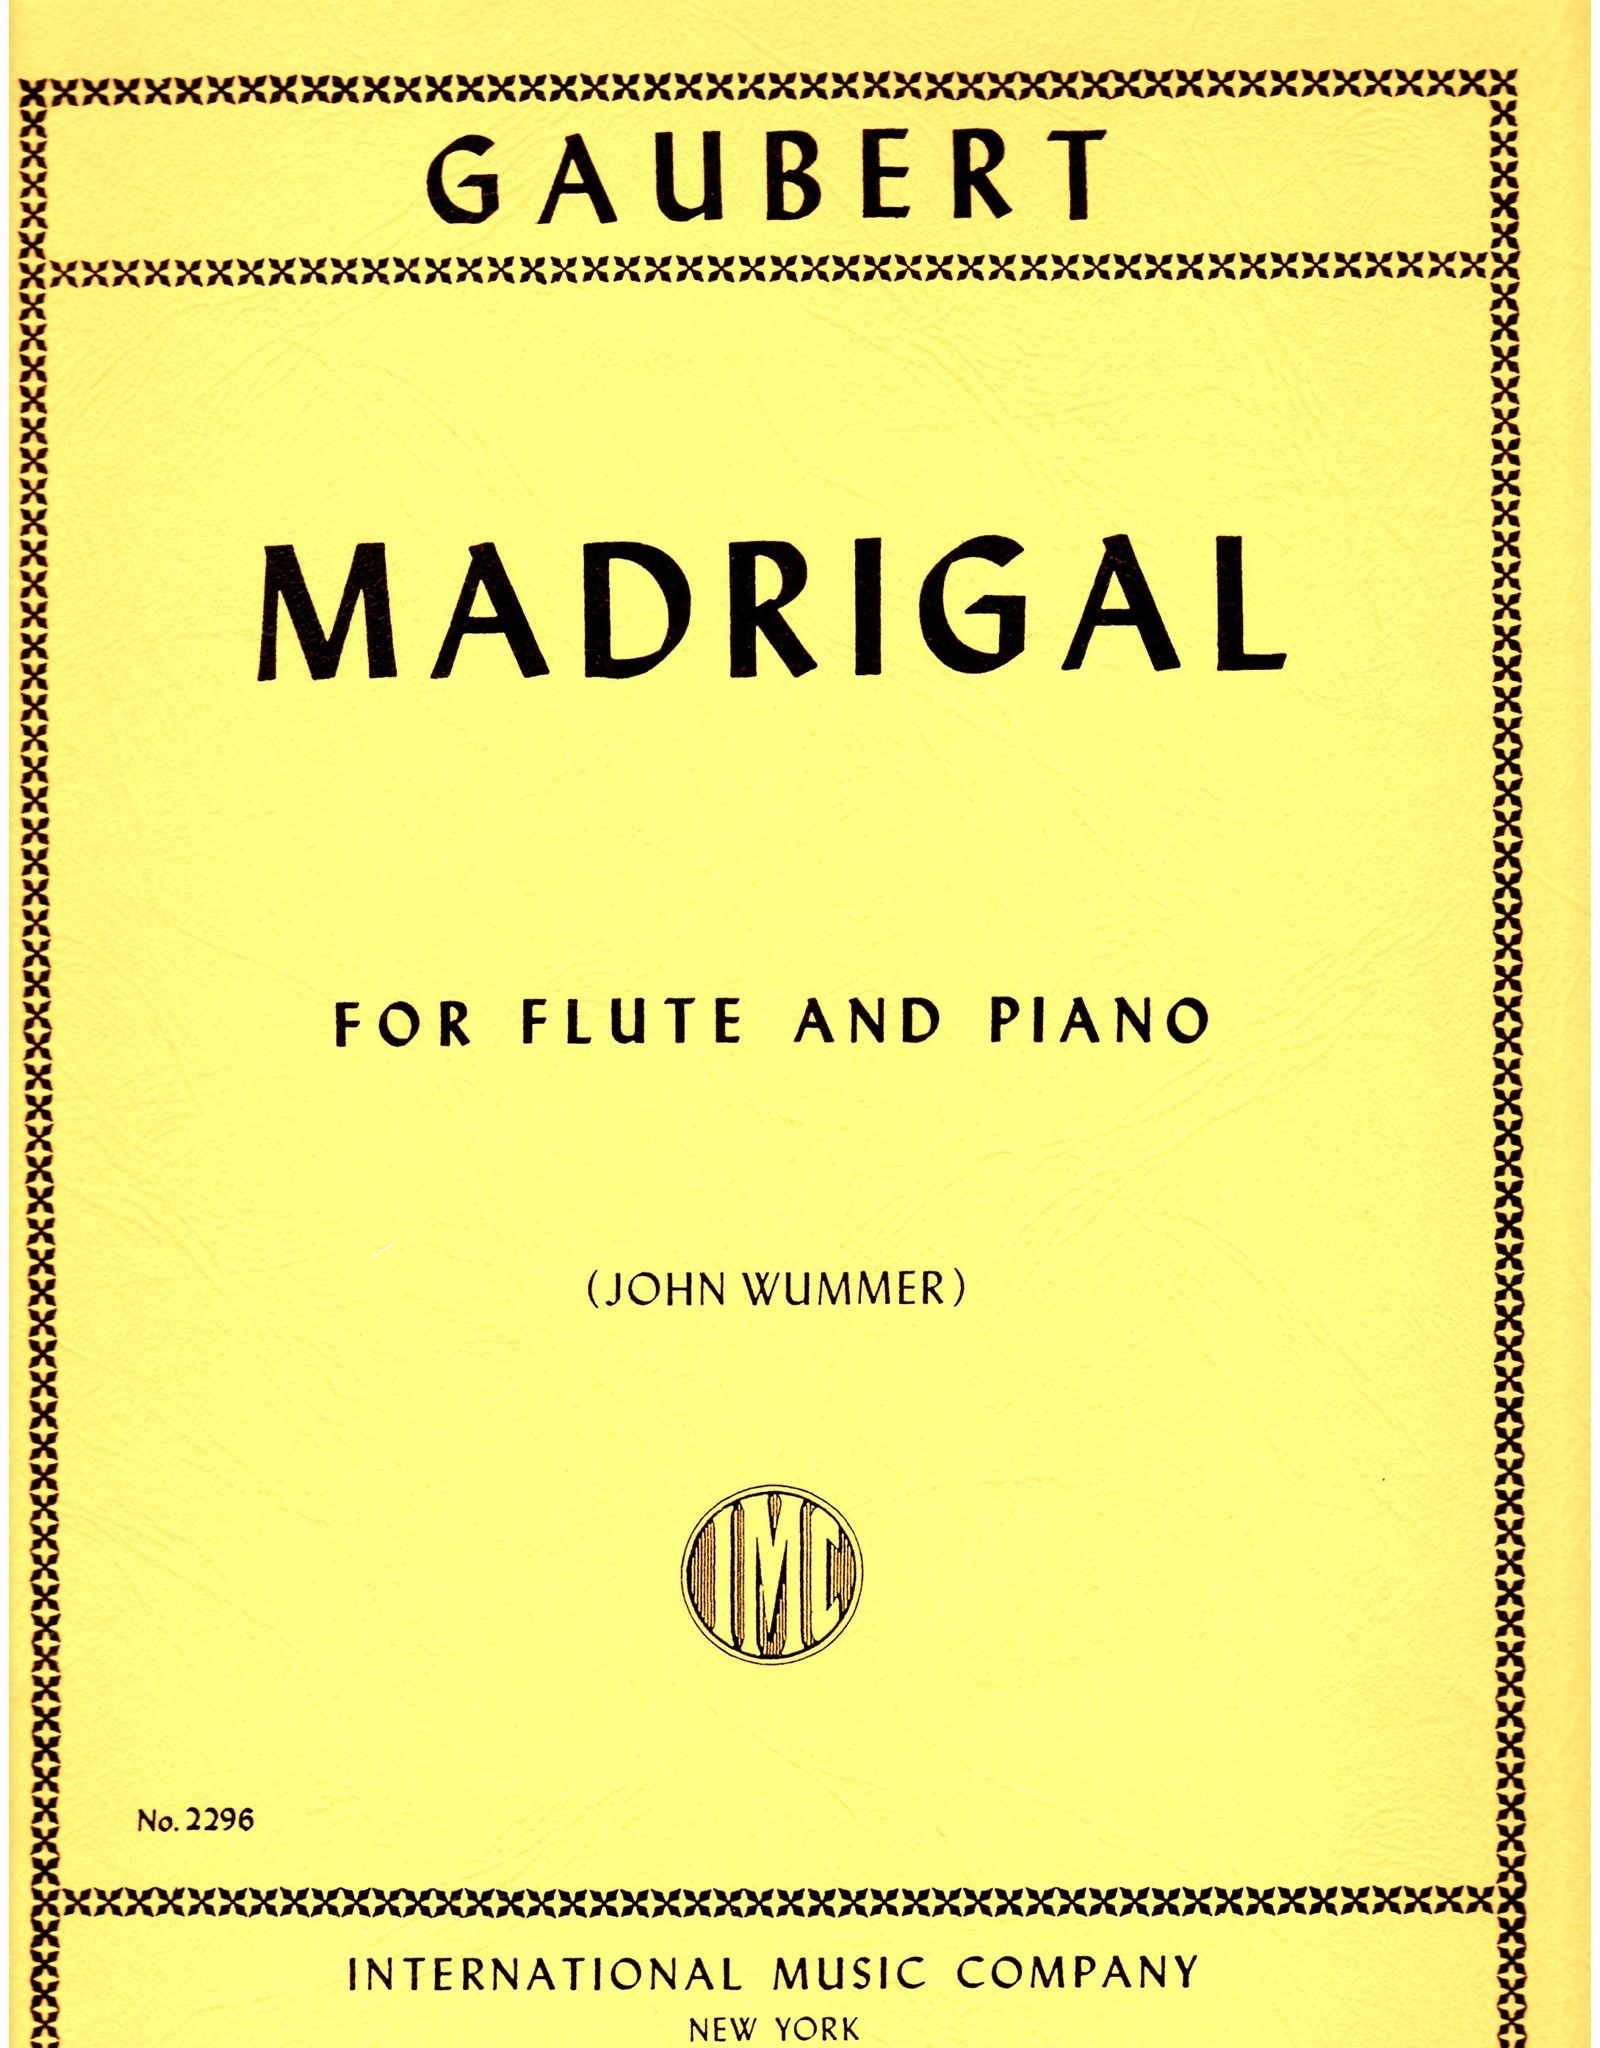 International Gaubert Madrigal - Flute/Piano